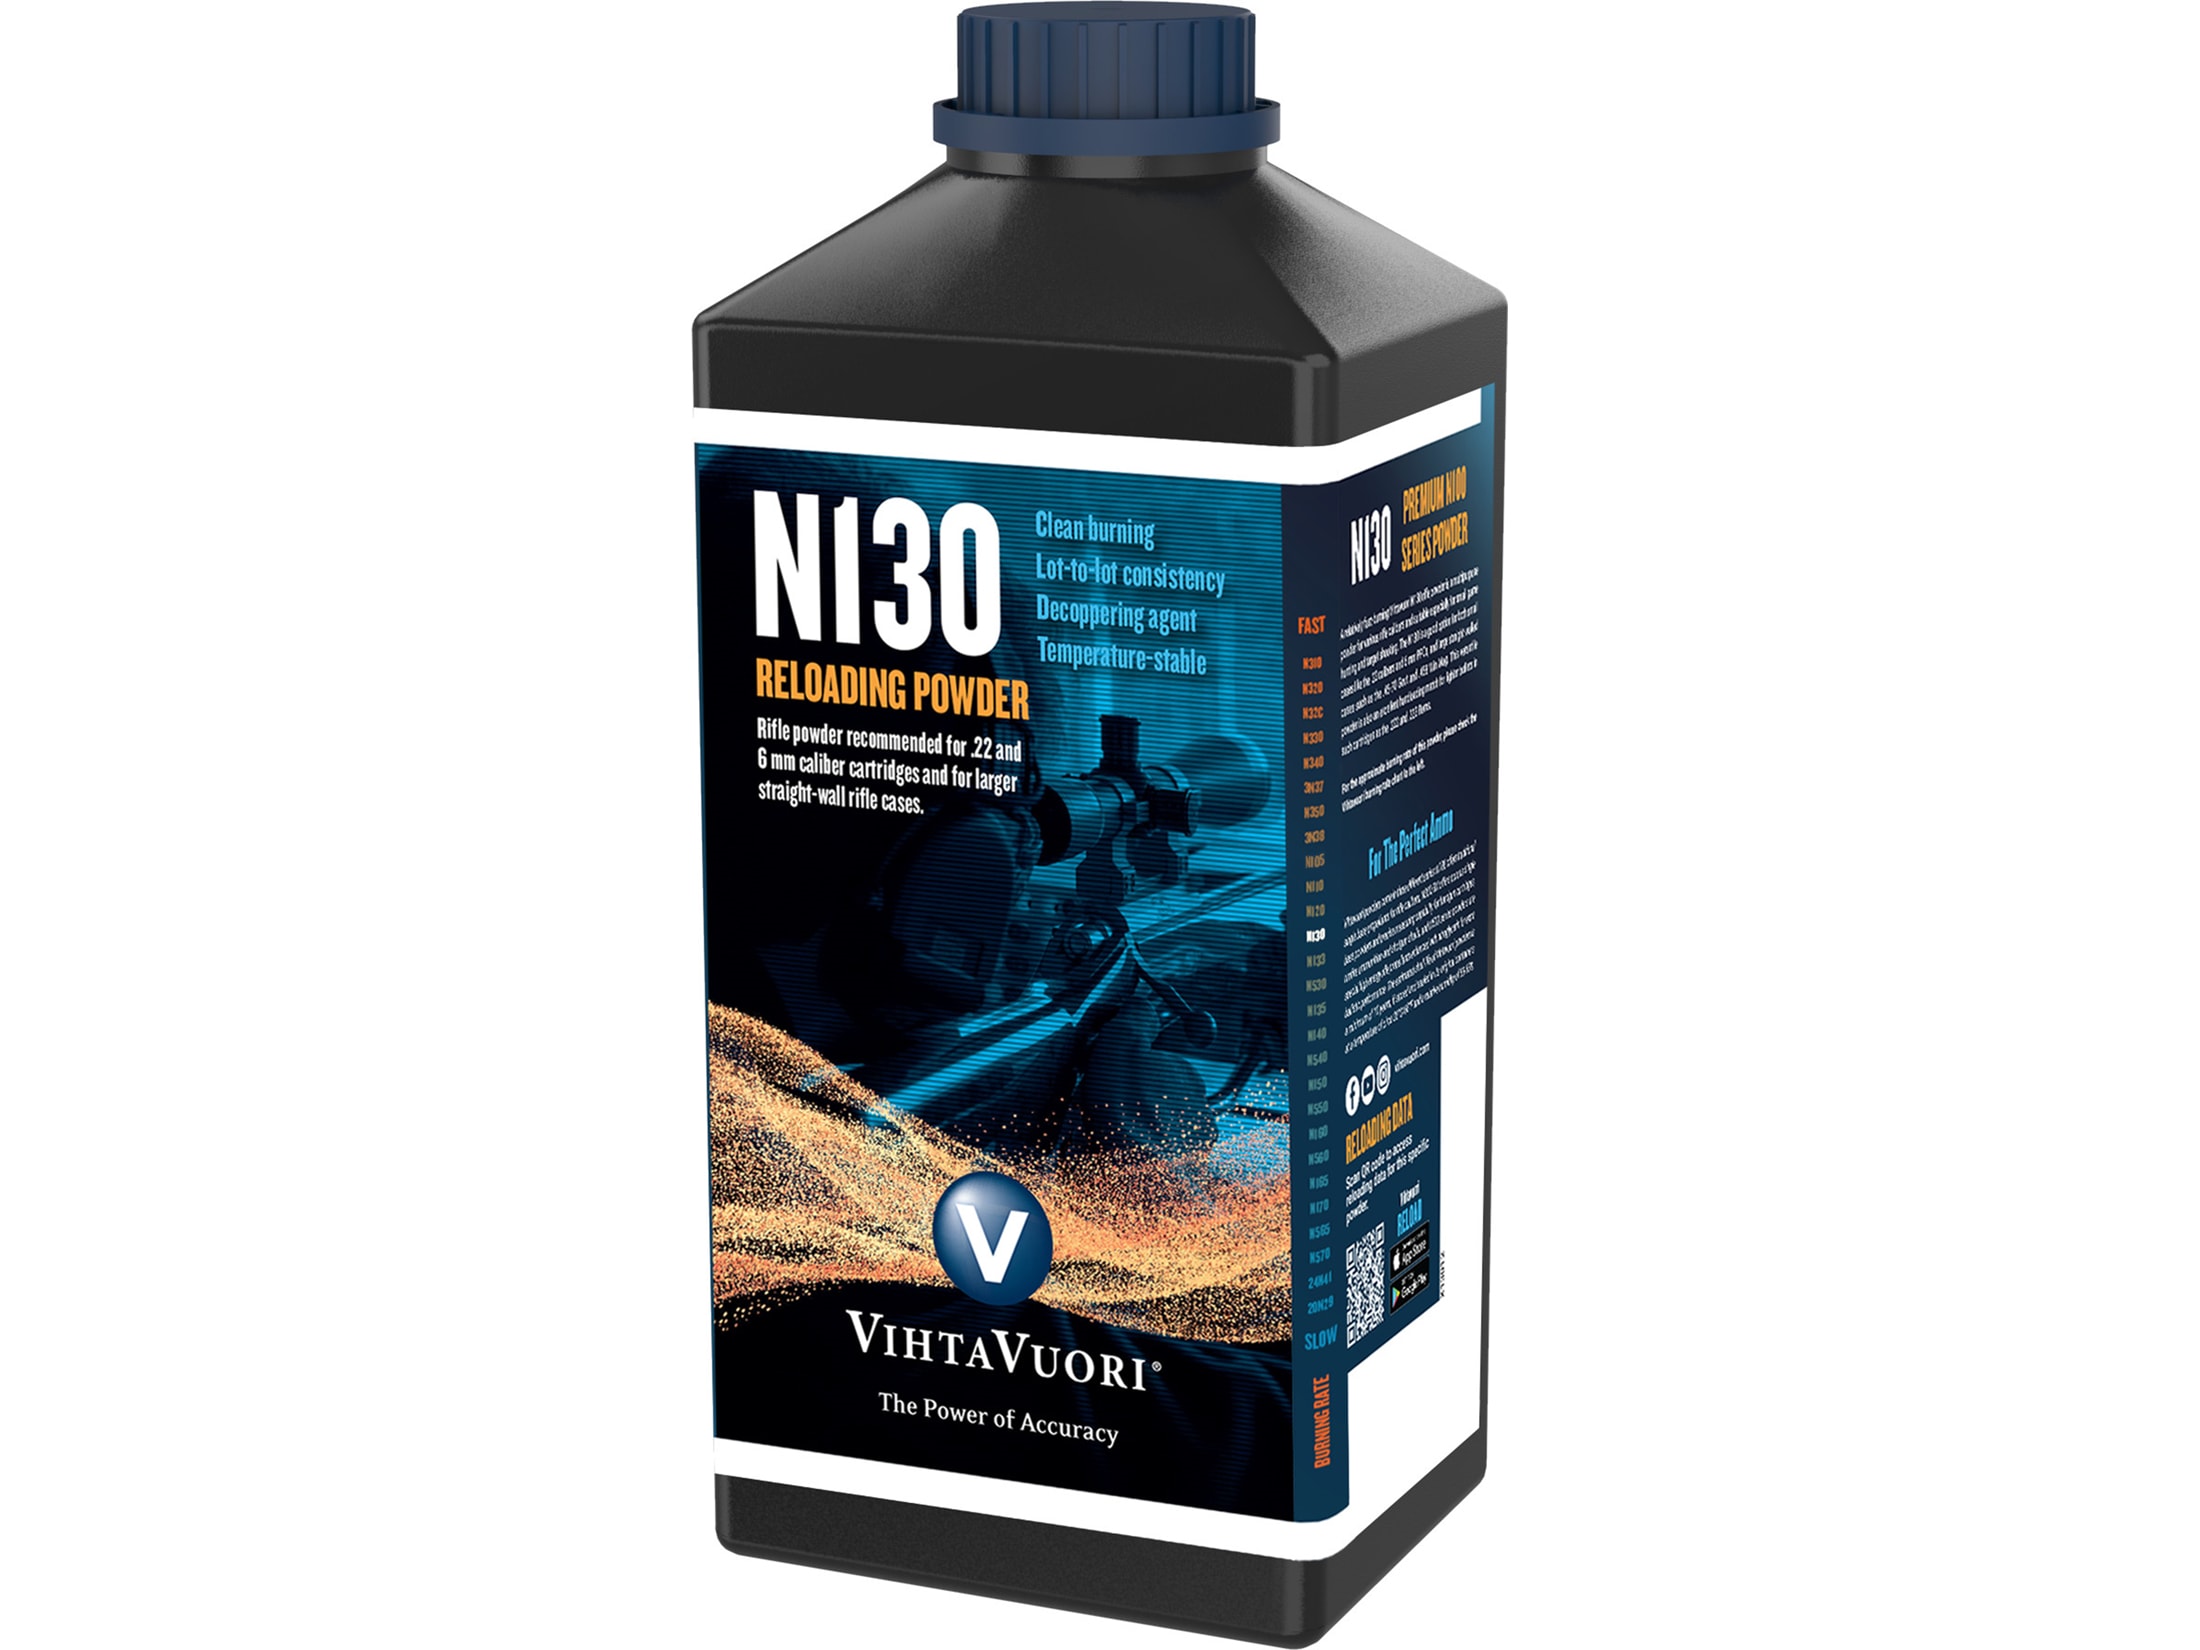 VihtaVuori N130 Powder in stock now for sale